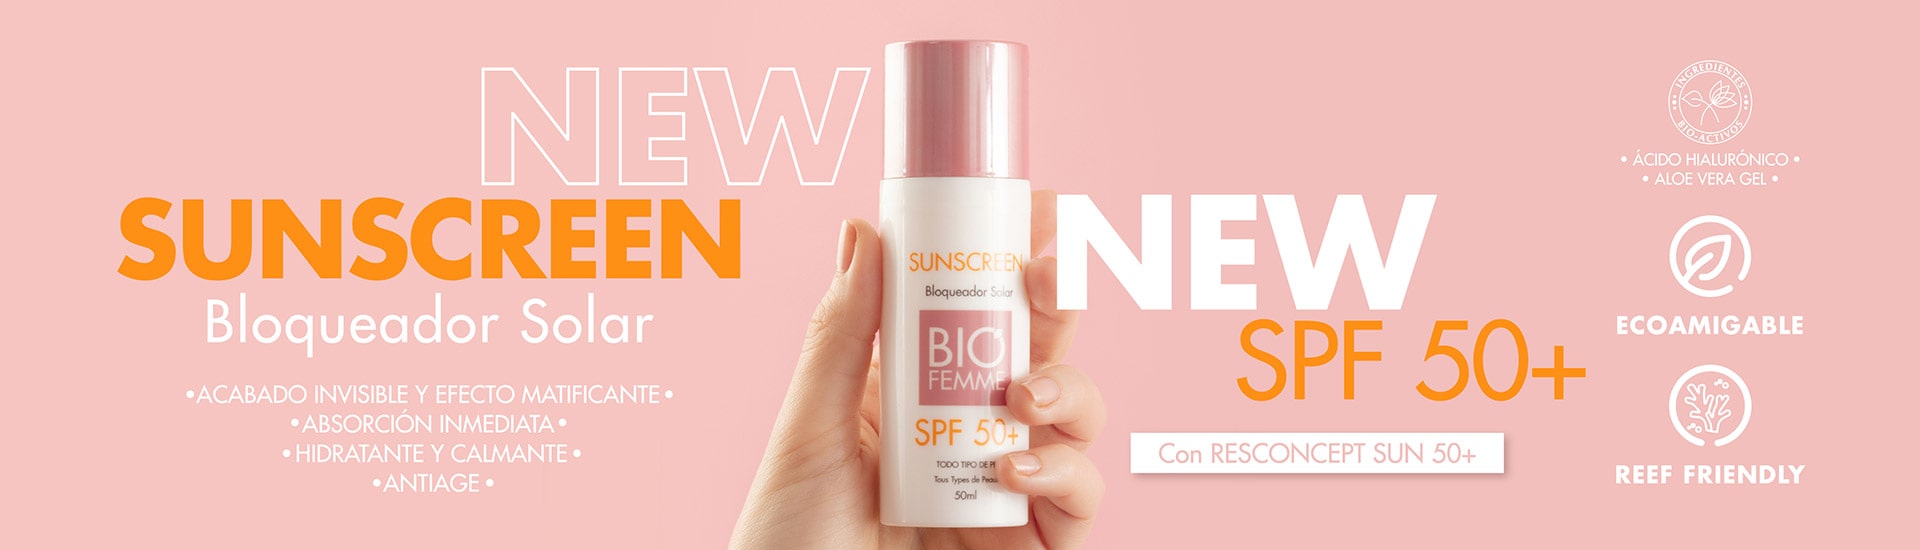 NEW-Sunscreen-50-BF